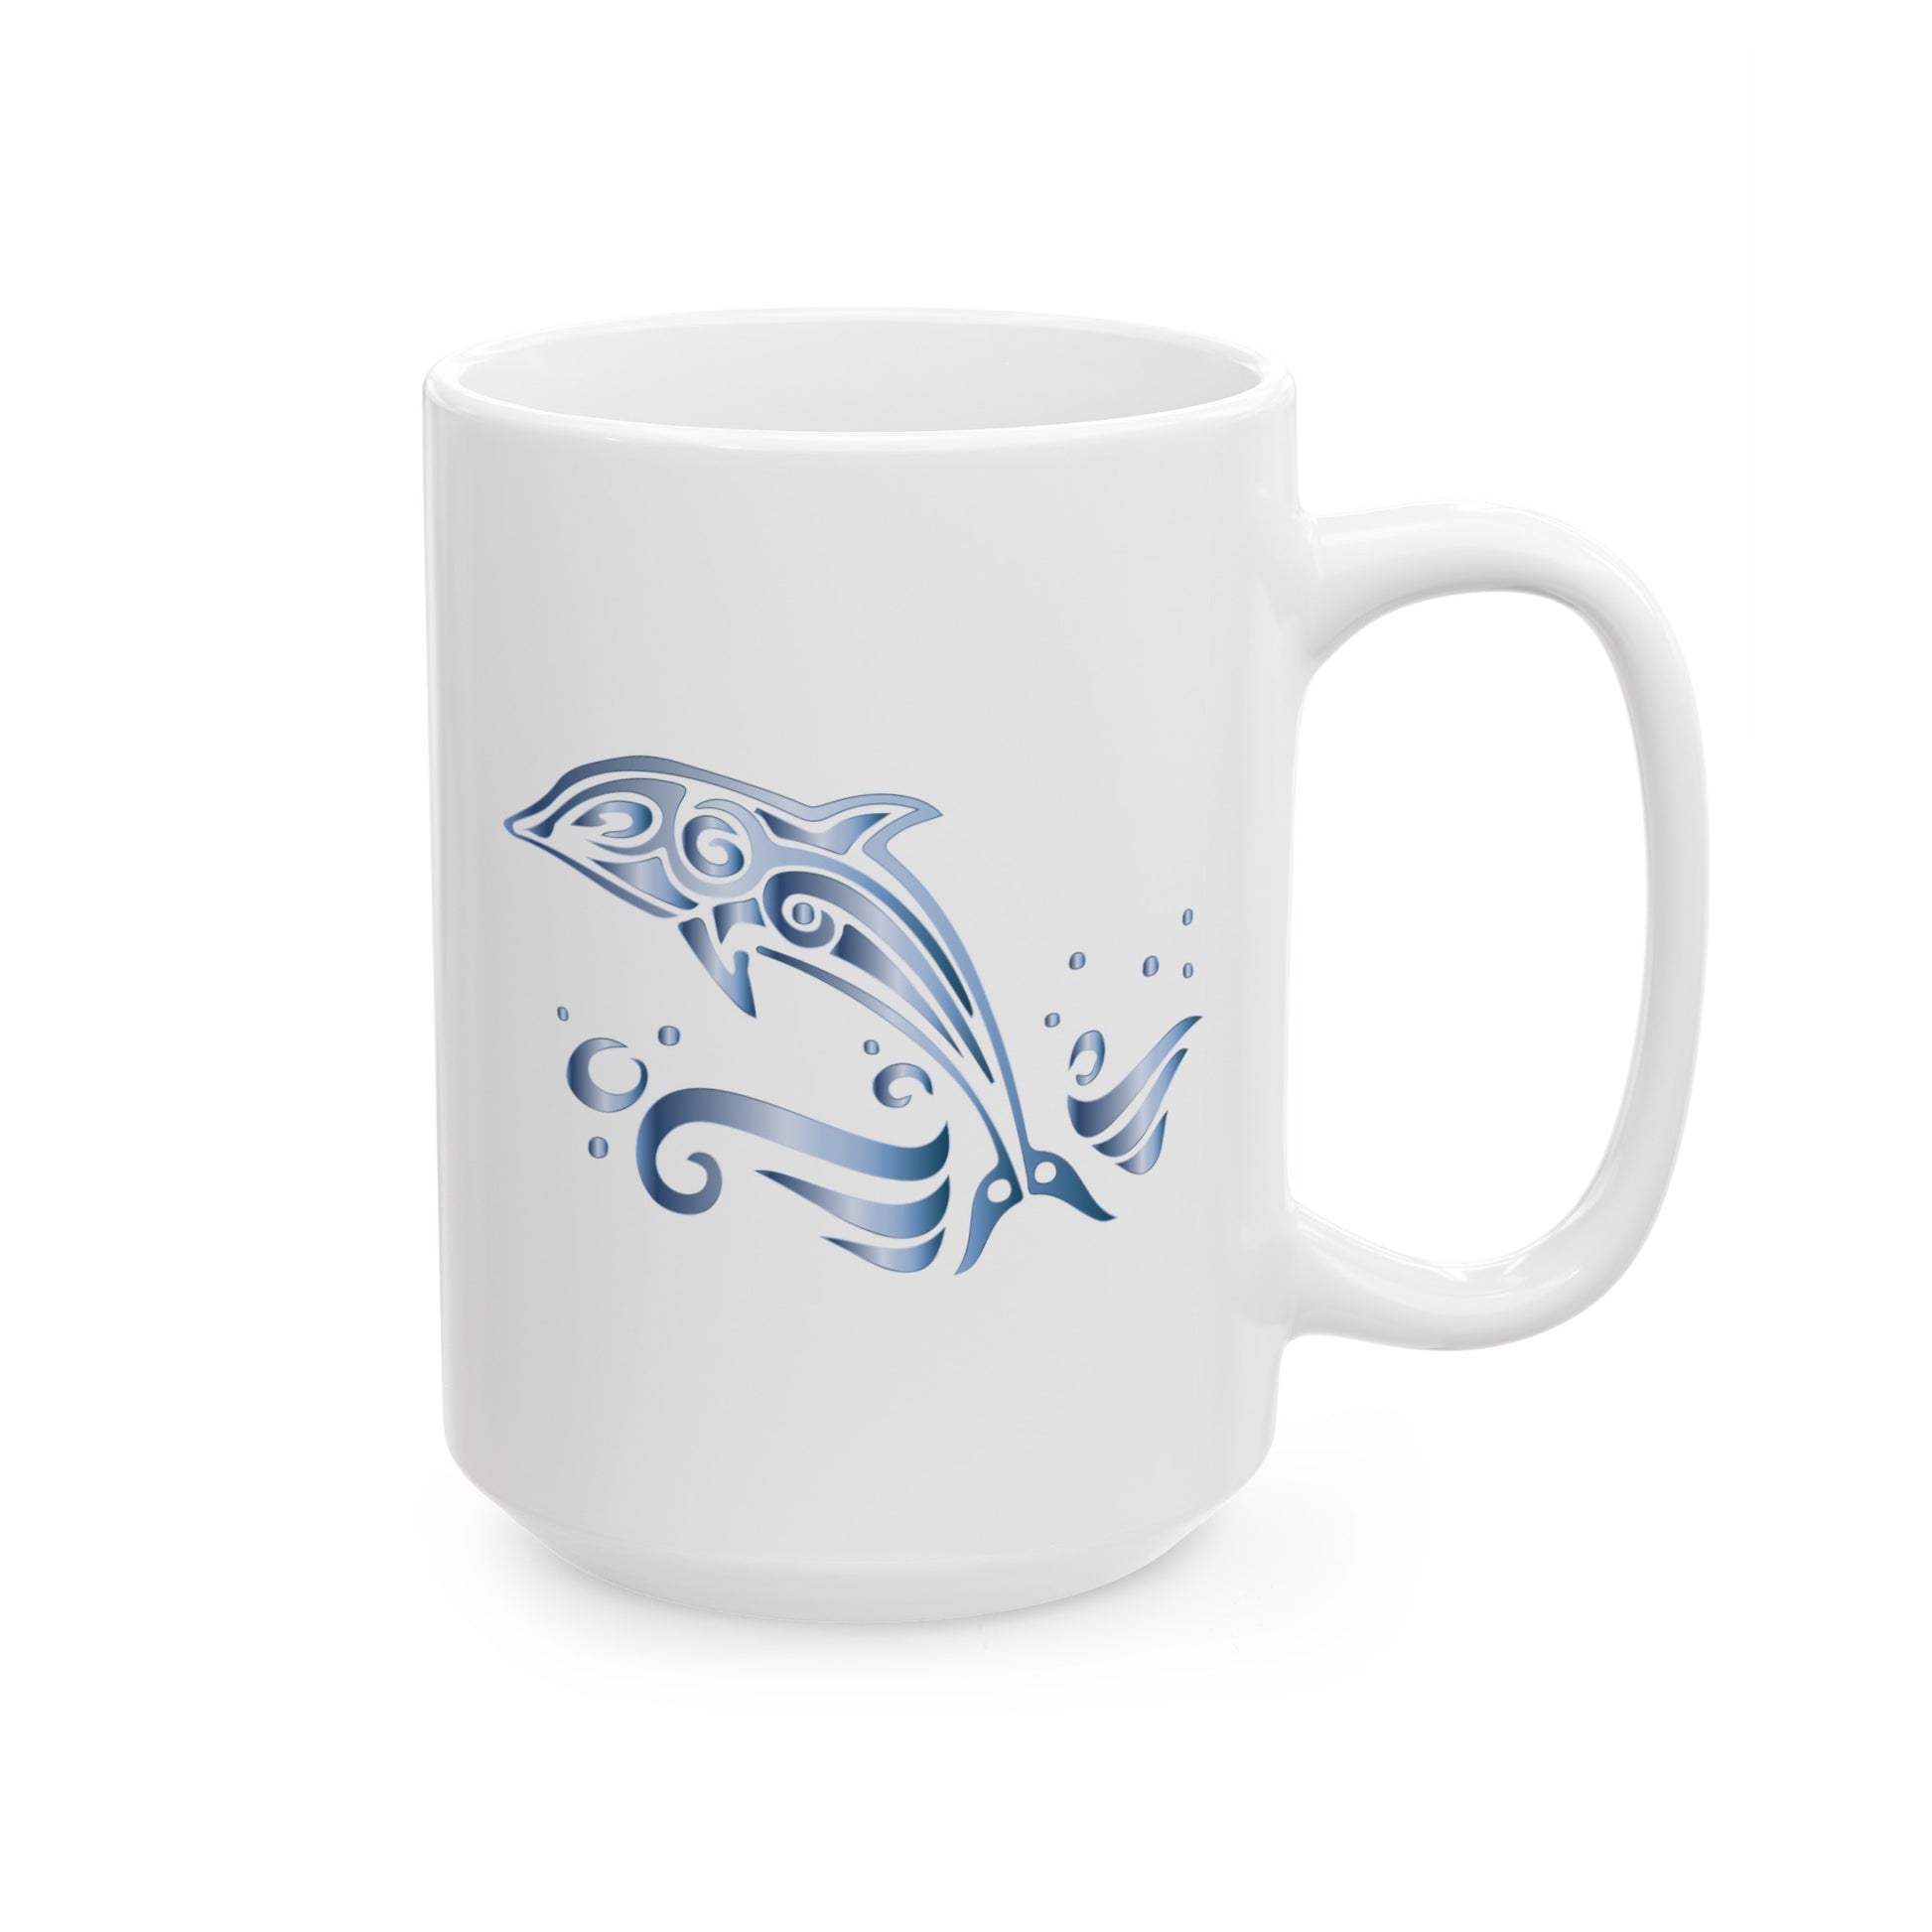 Dolphin Coffee Mug - Double Sided White Ceramic 15oz by TheGlassyLass.com